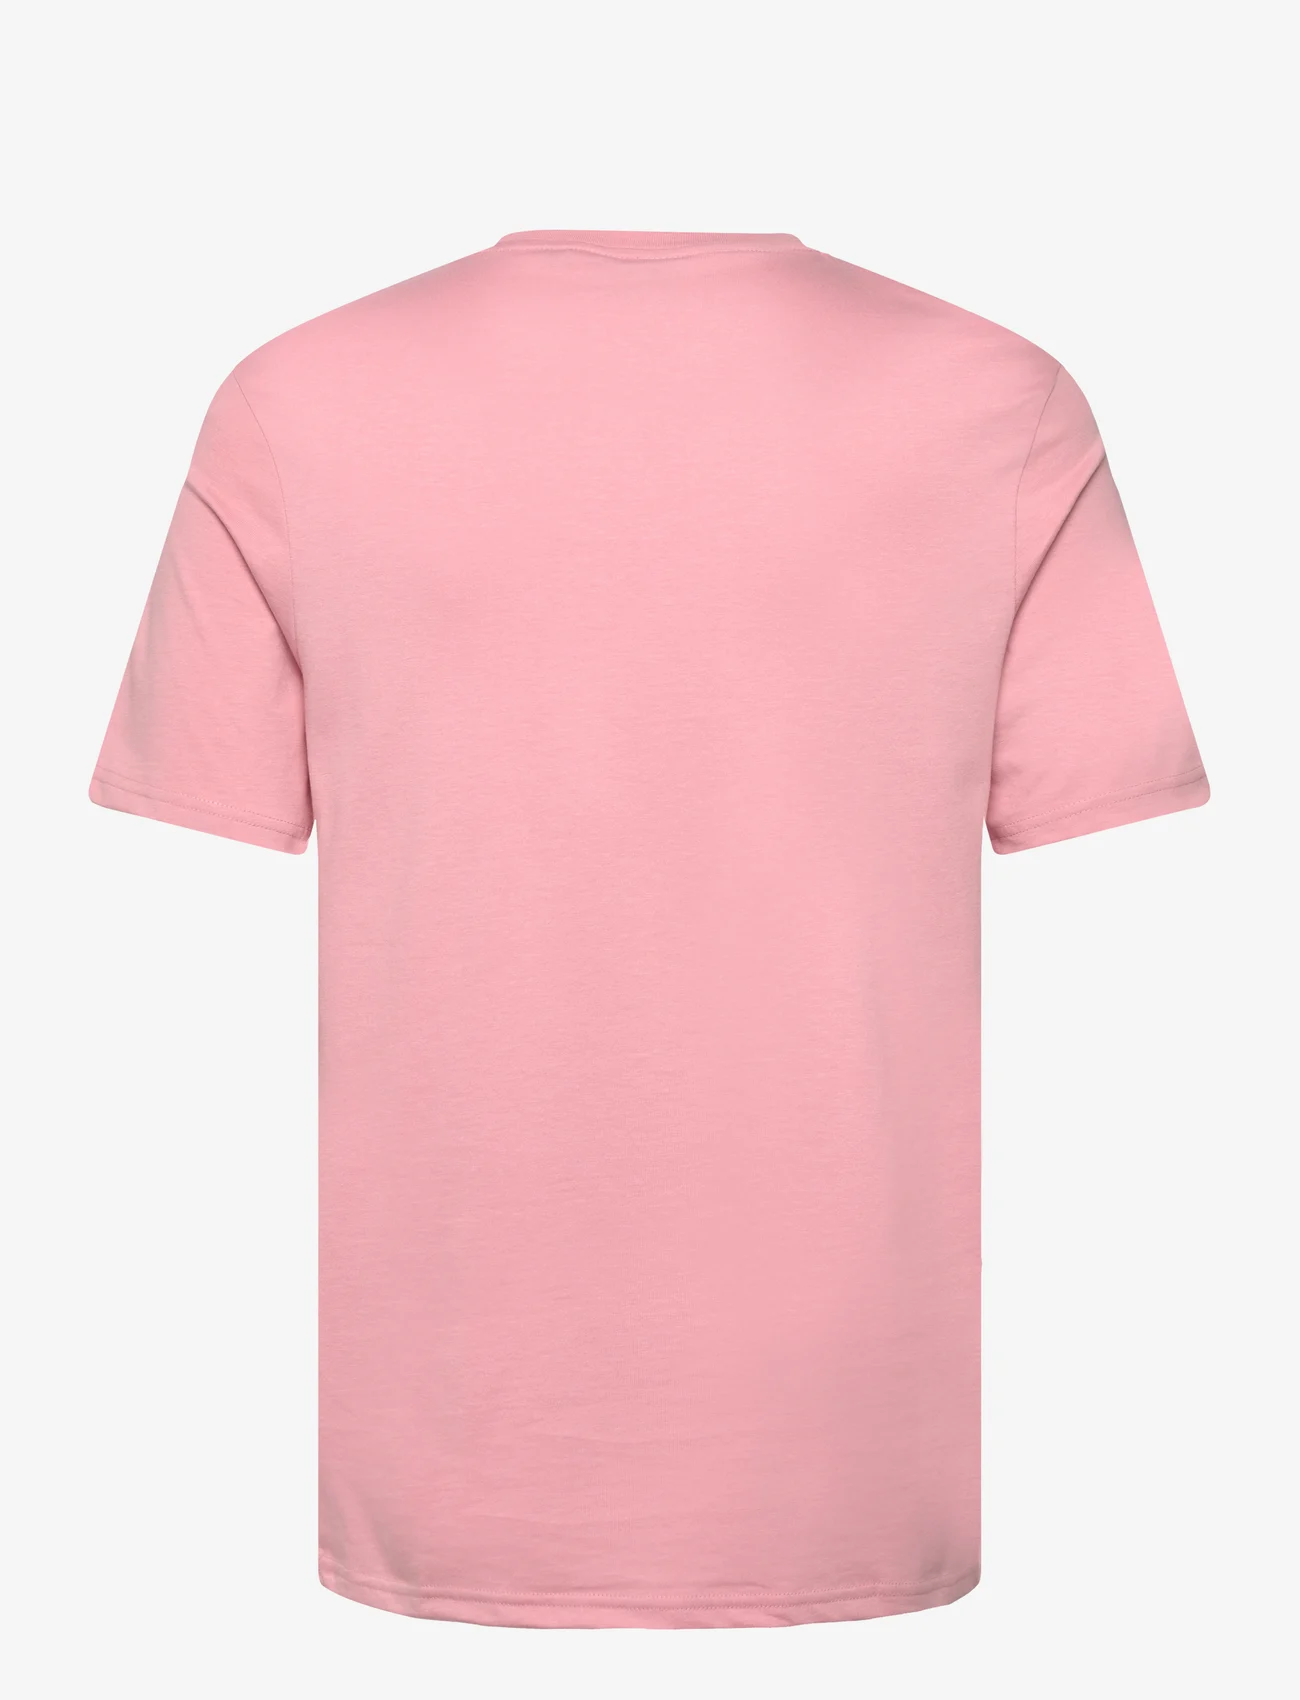 Lyle & Scott - Plain T-Shirt - laagste prijzen - x238 palm pink - 1